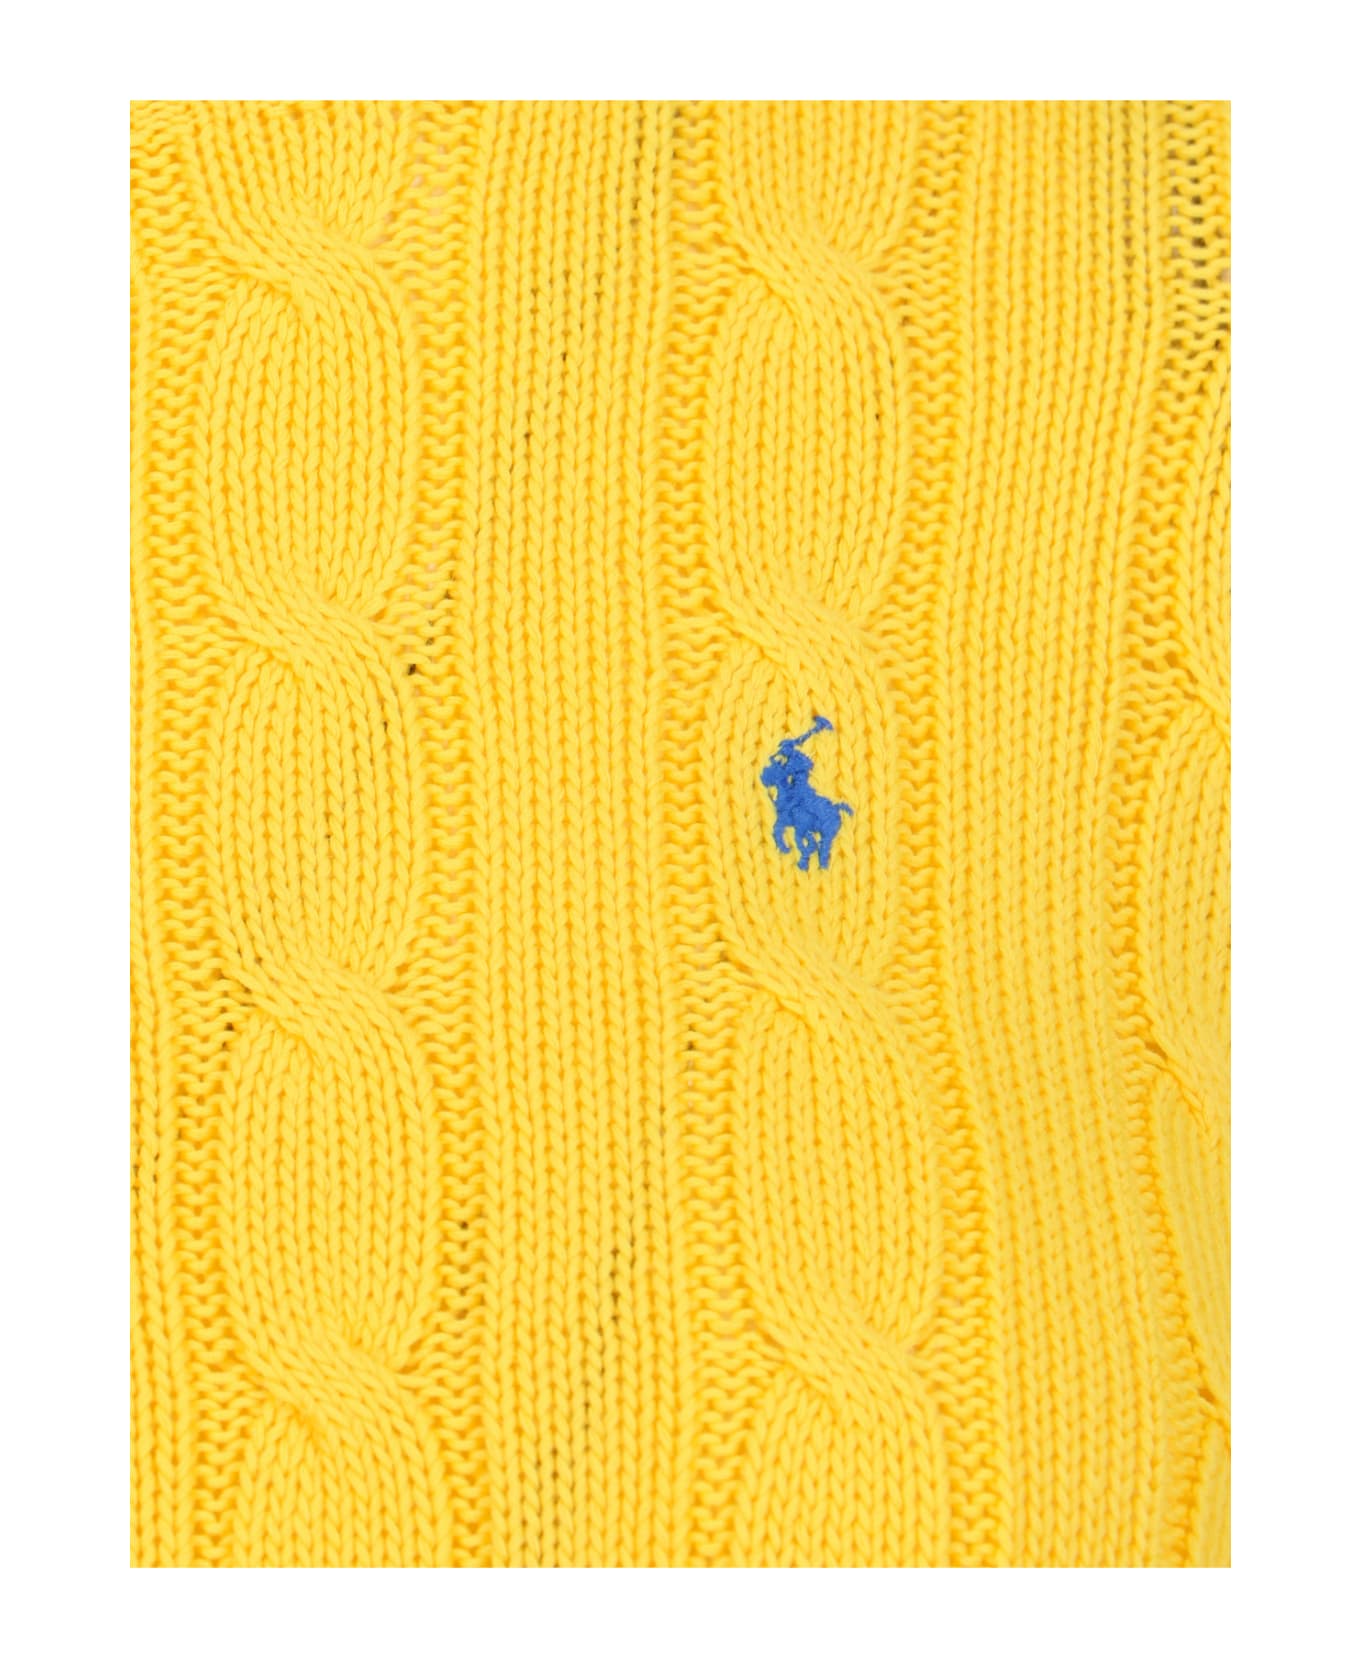 Ralph Lauren Logo Crew Neck Sweater - Yellow ニットウェア